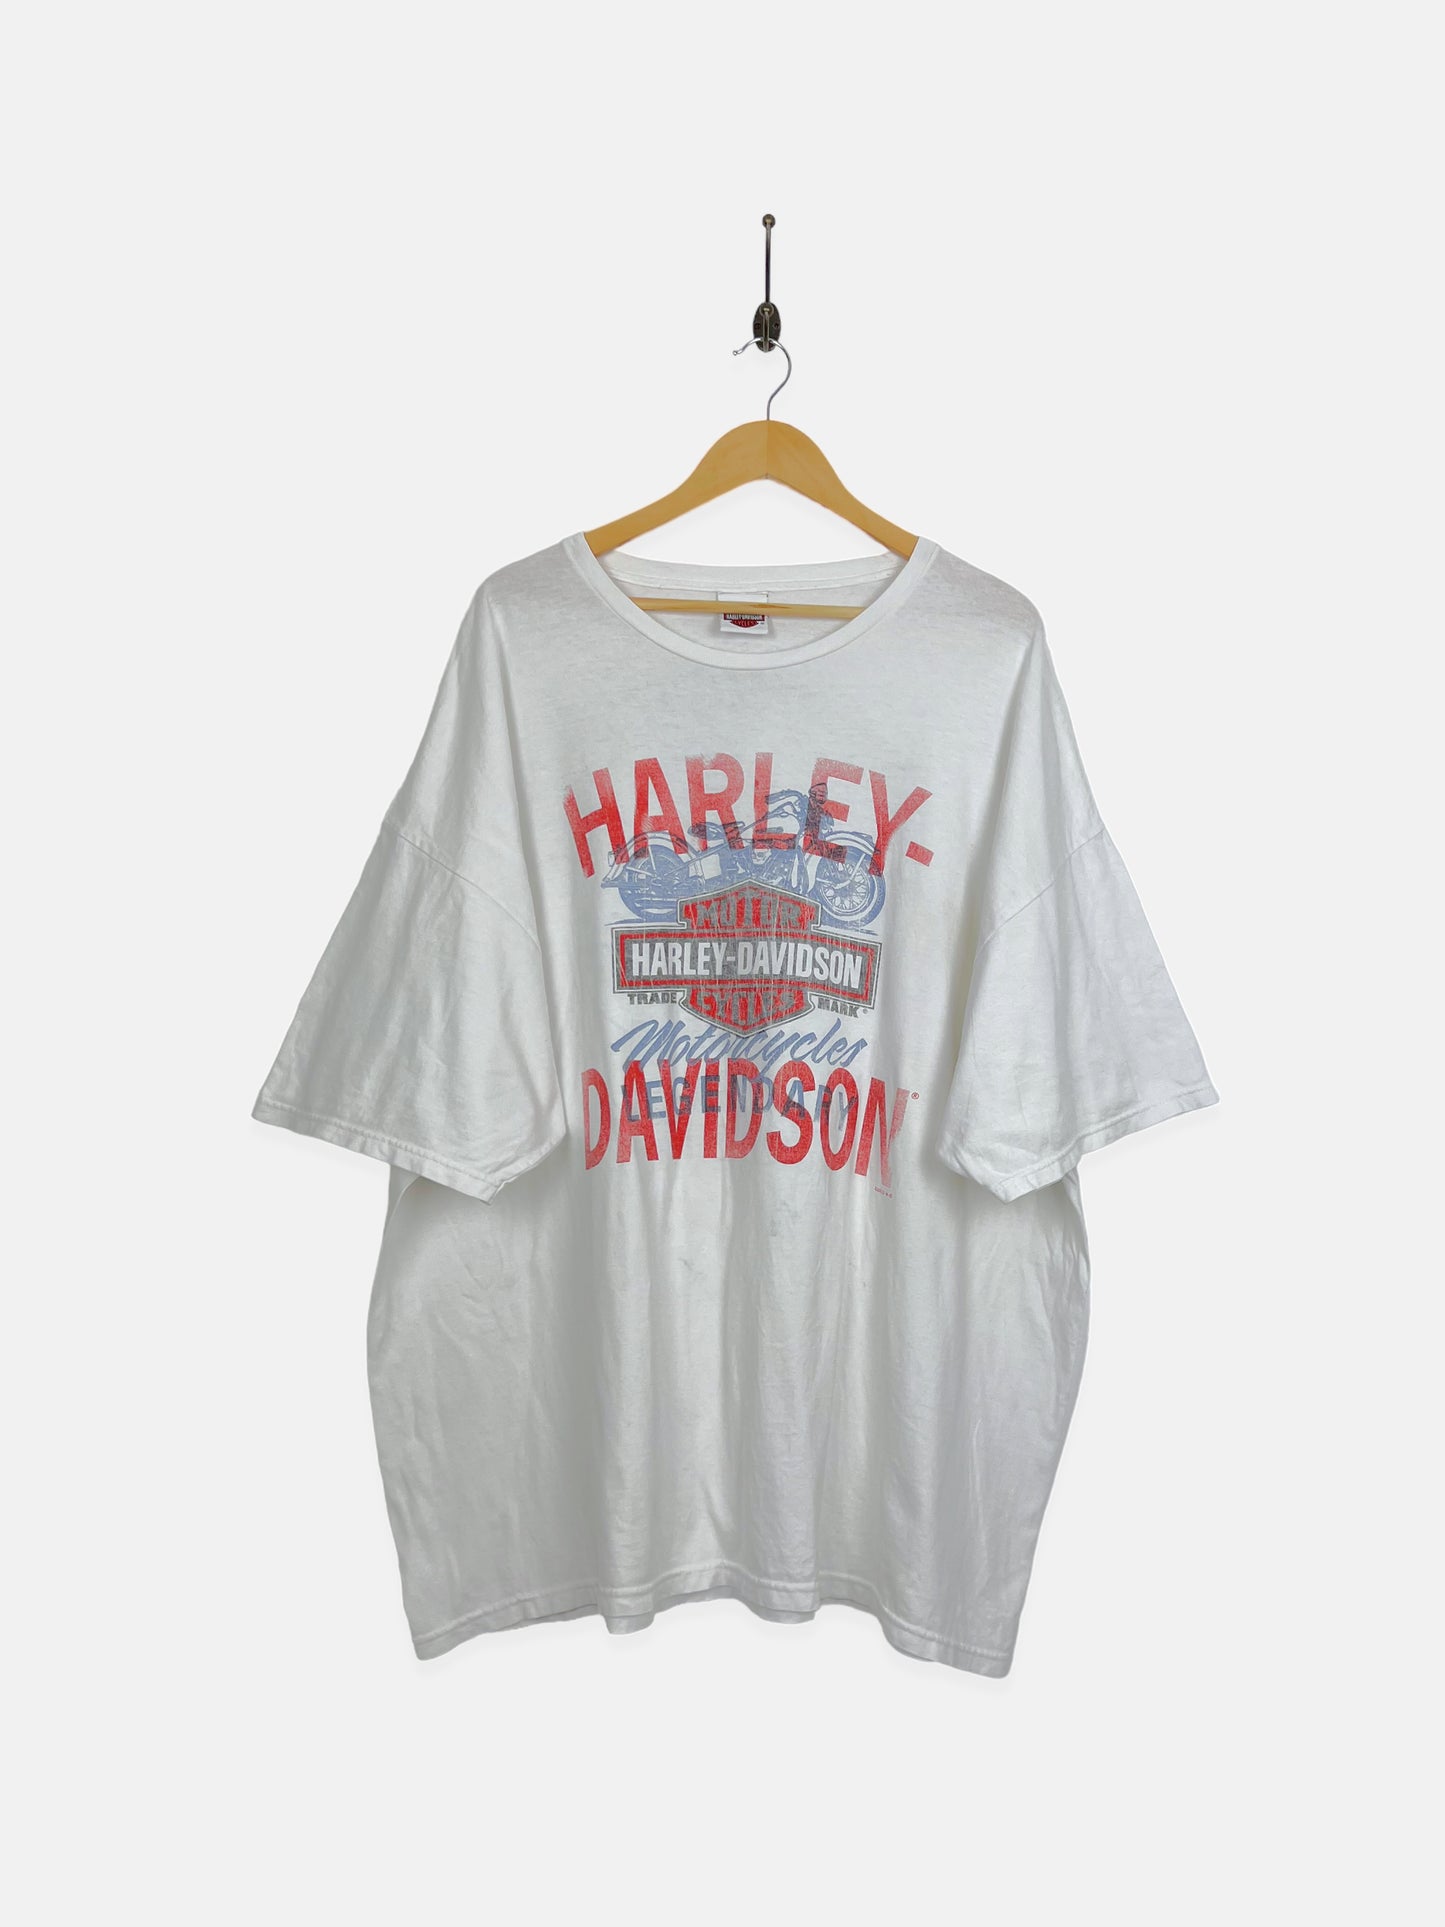 Harley Davidson St Louis Missouri Vintage T-Shirt Size 4XL